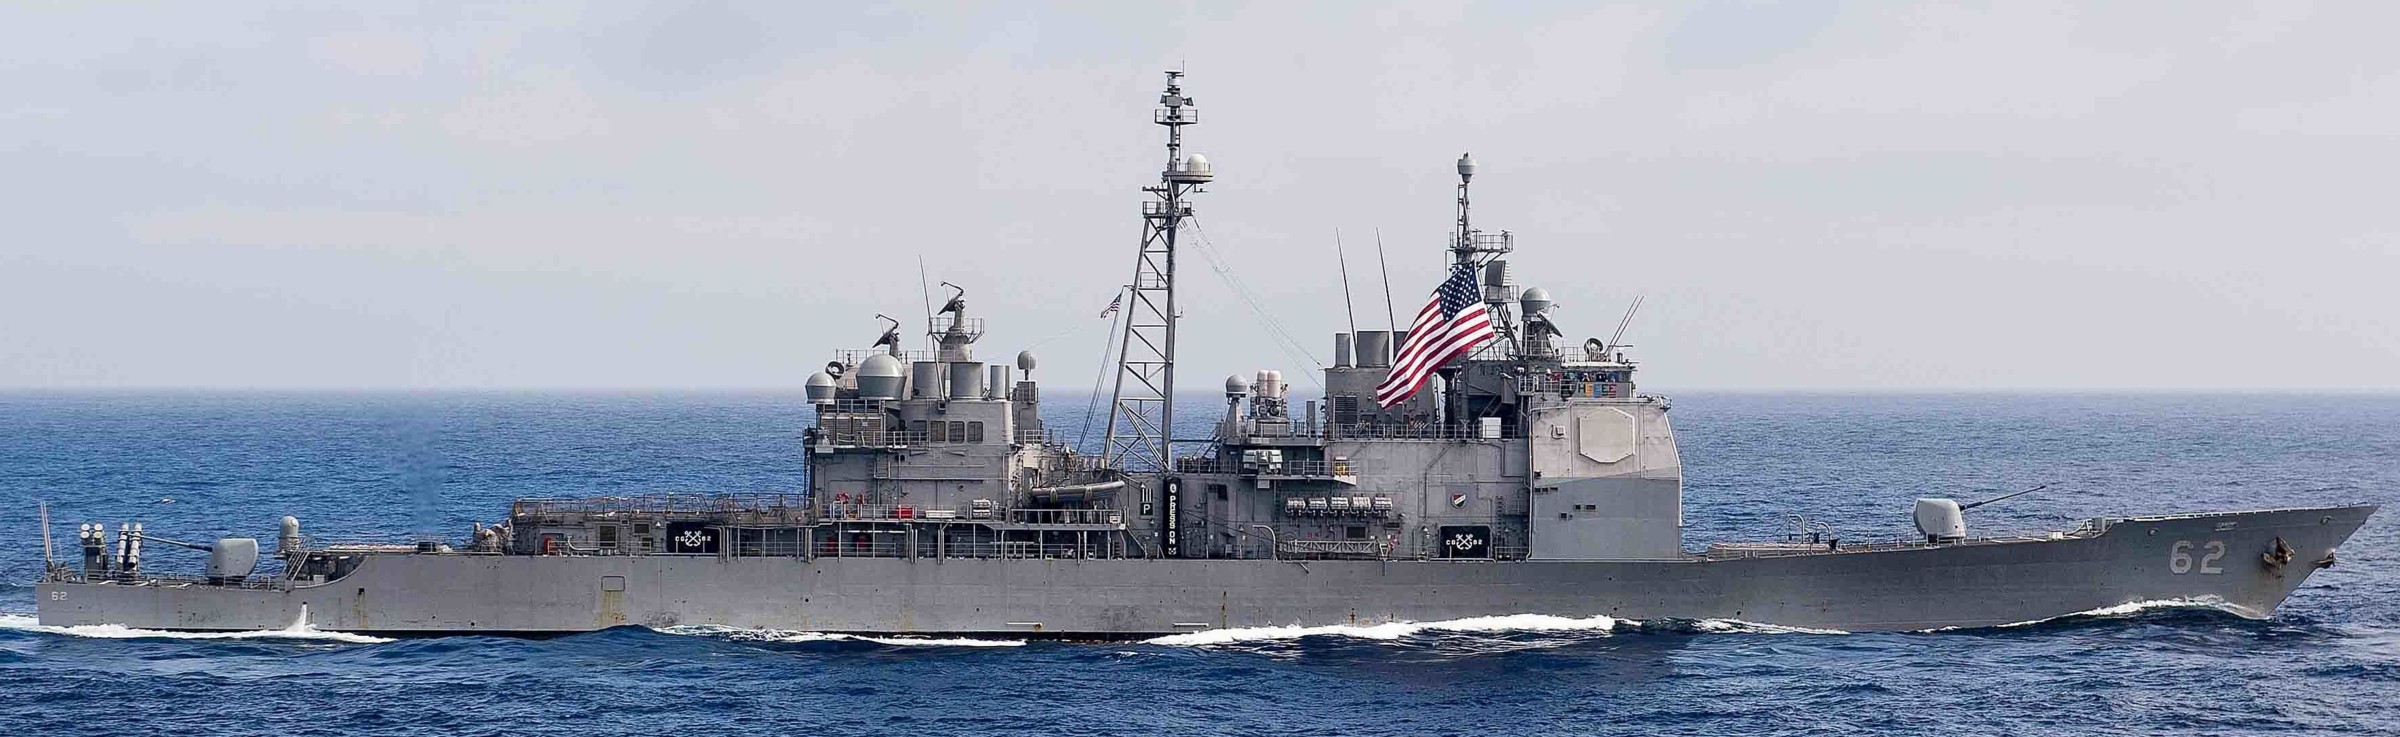 cg-62 uss chancellorsville ticonderoga class guided missile cruiser aegis us navy 56